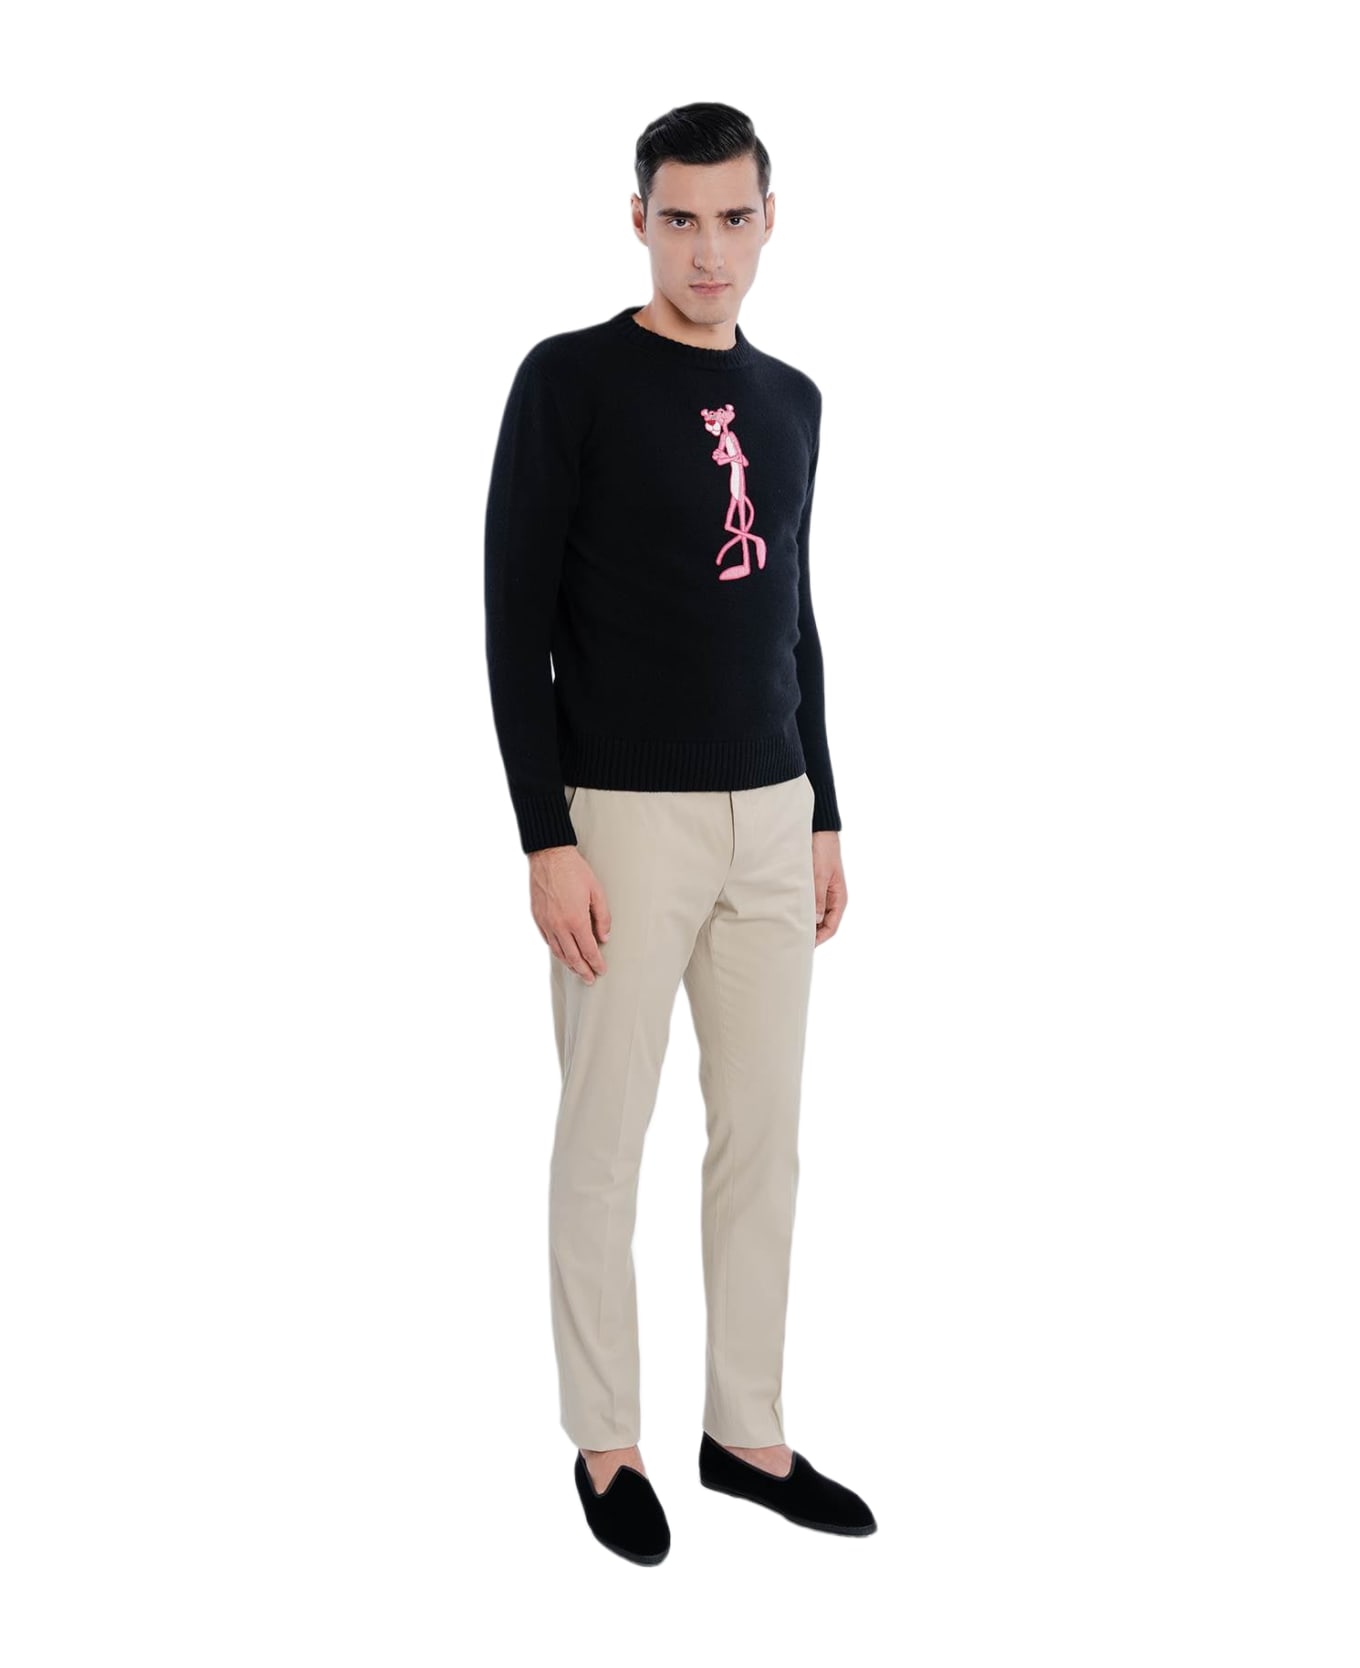 Larusmiani Sweater 'pink Panther' Sweater - Black